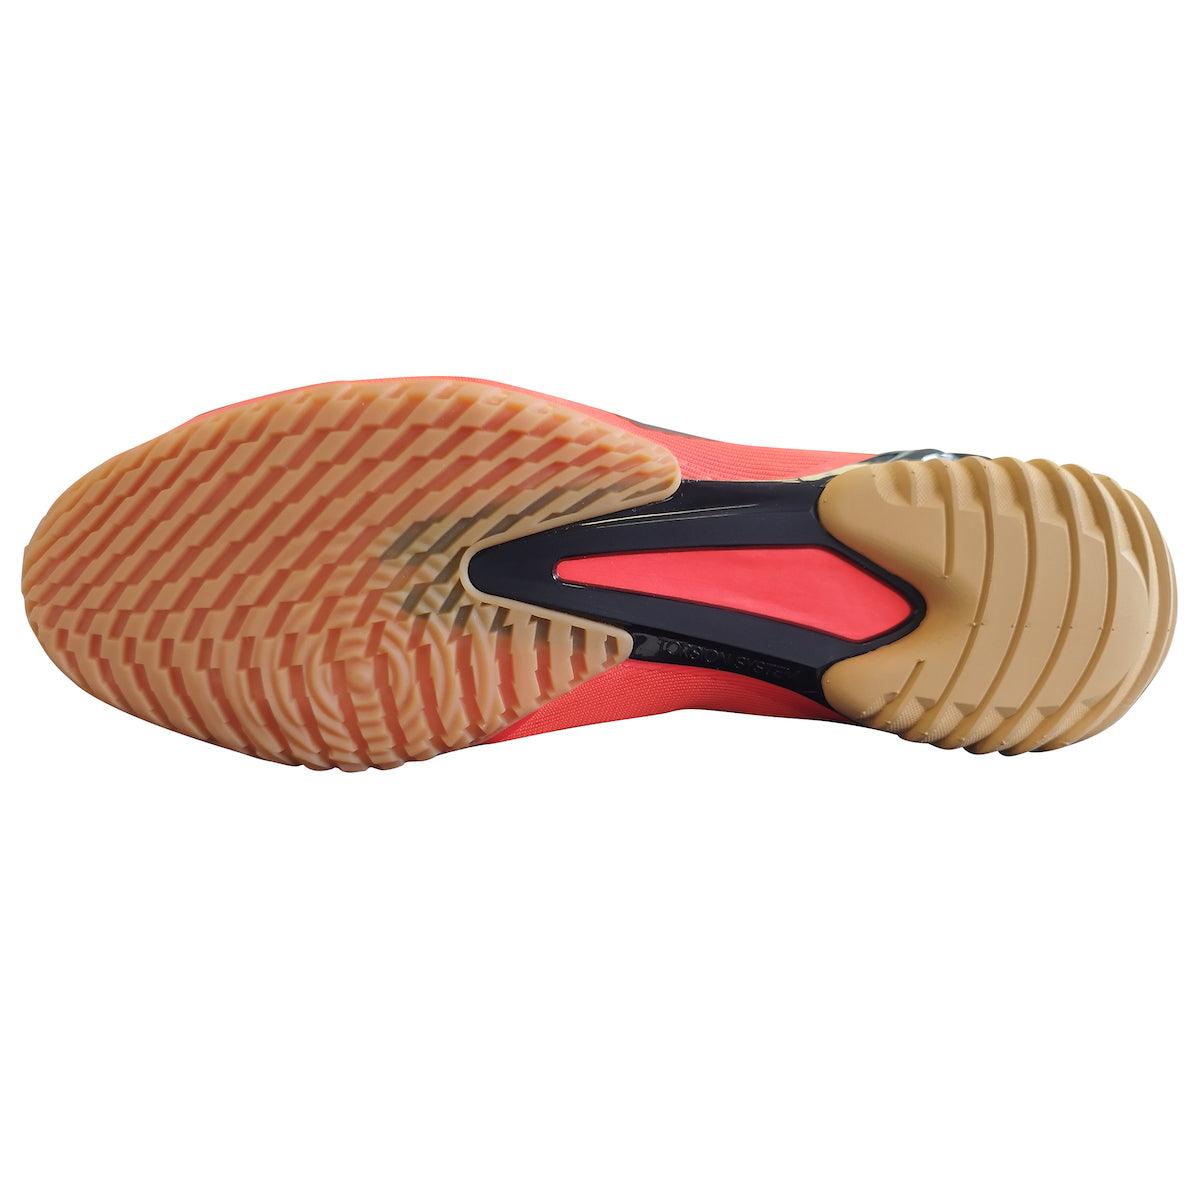 Chaussures de Boxe Anglaise Adidas Speedex Ultra - Rouge/Noir